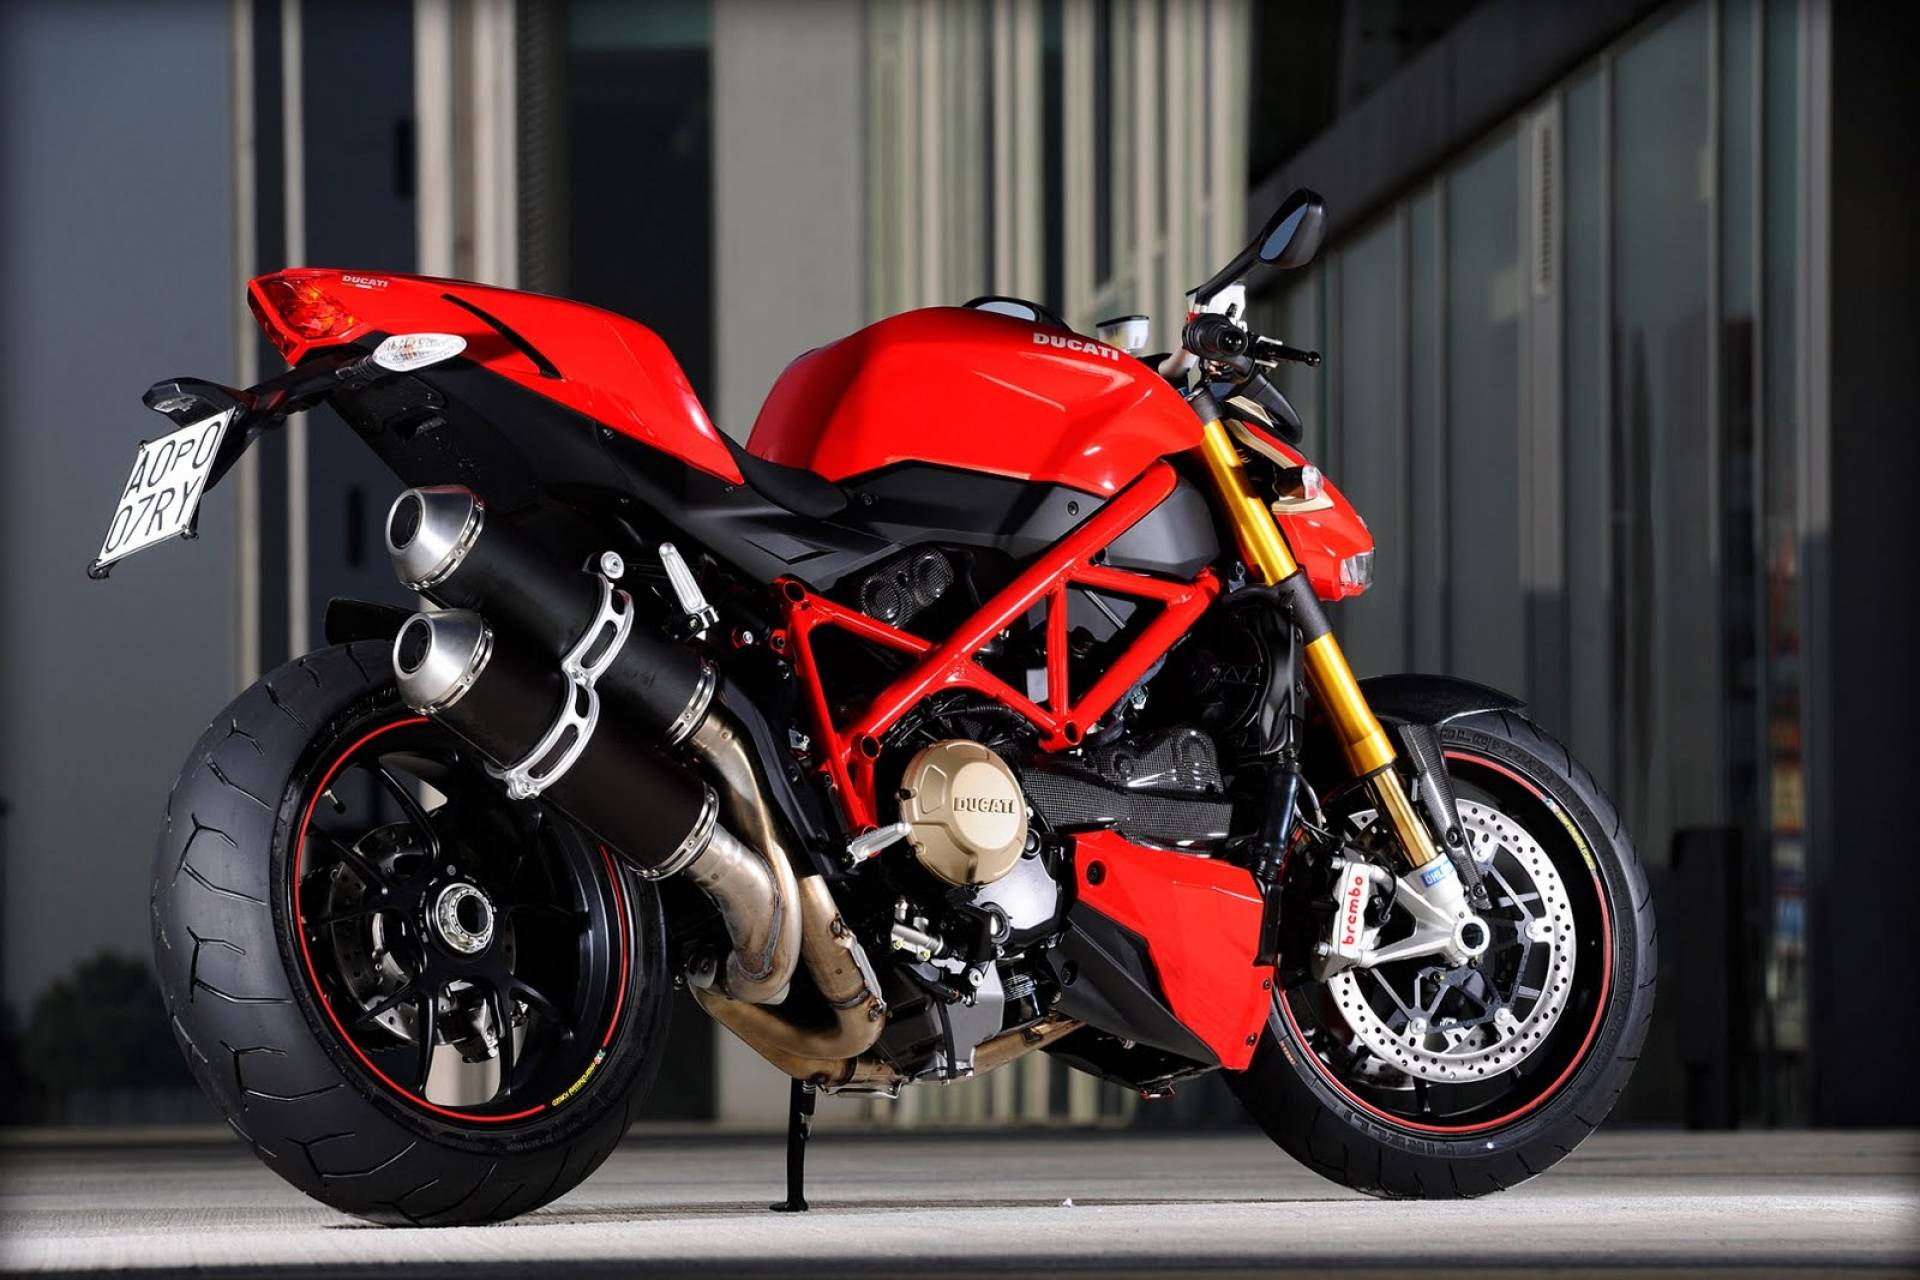 Мотоцикл ducati streetfighter 848 2014 — познаем по пунктам